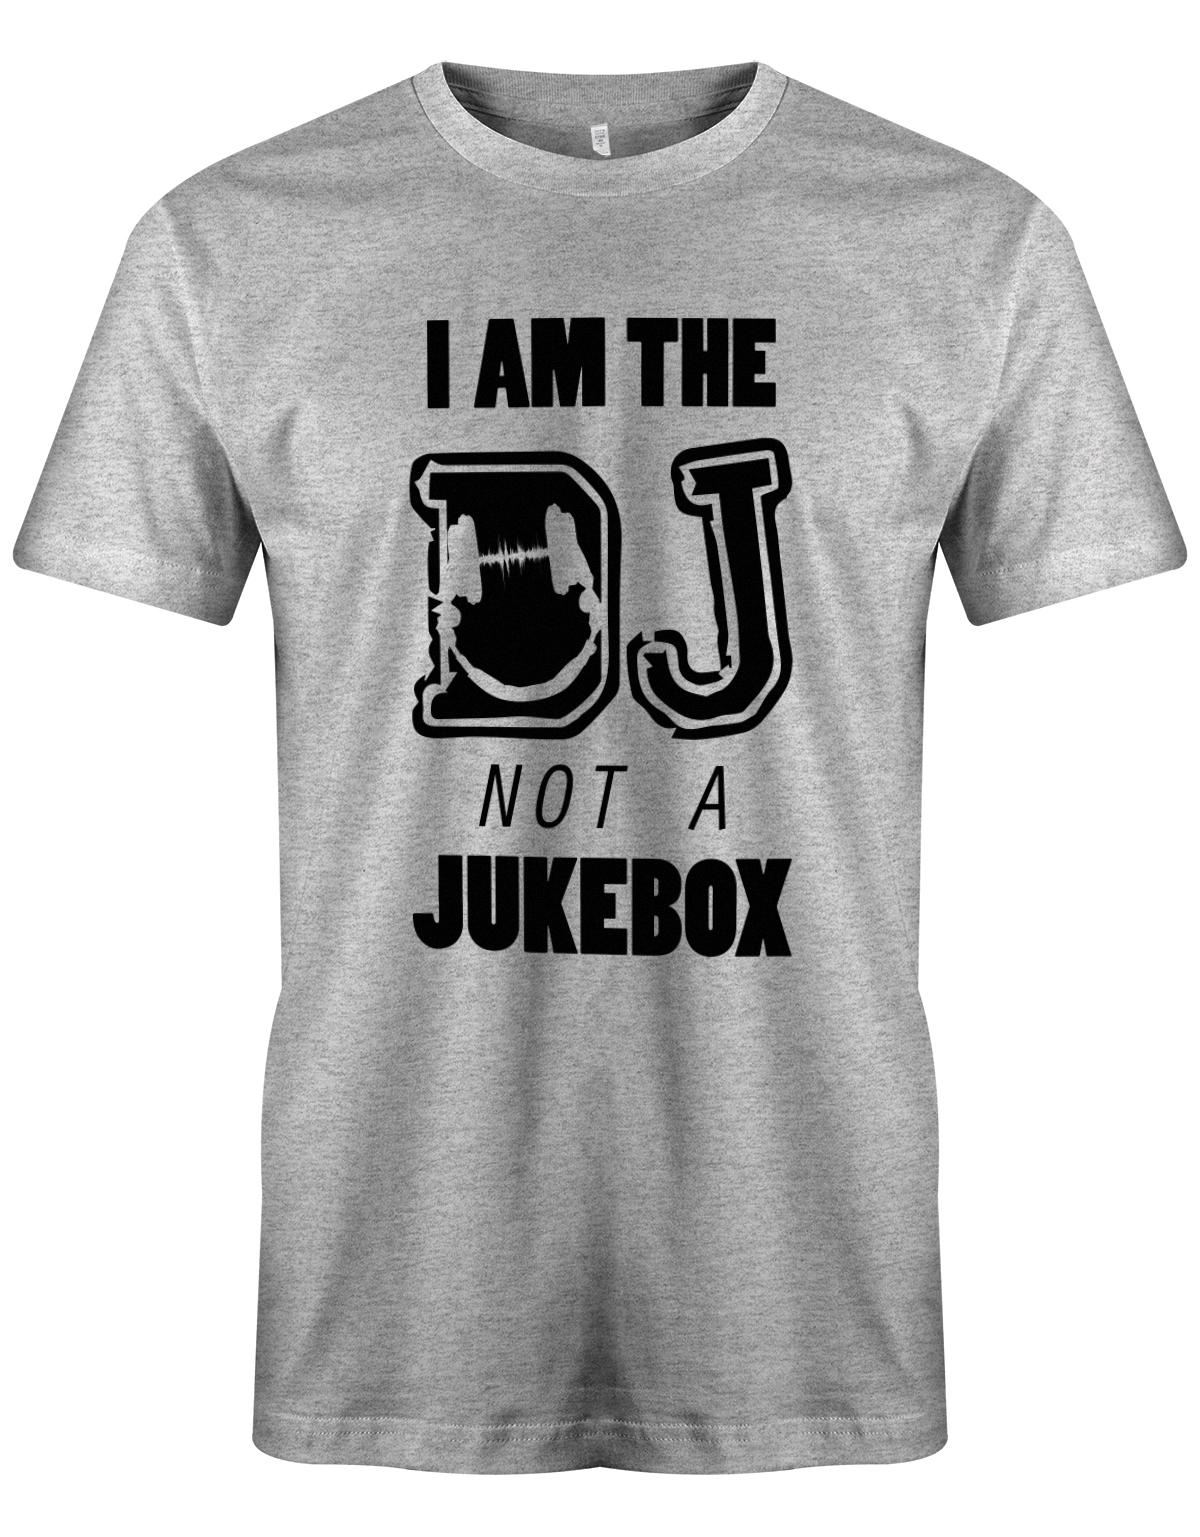 I-am-the-DJ-not-a-JUkebox-Herren-Grau